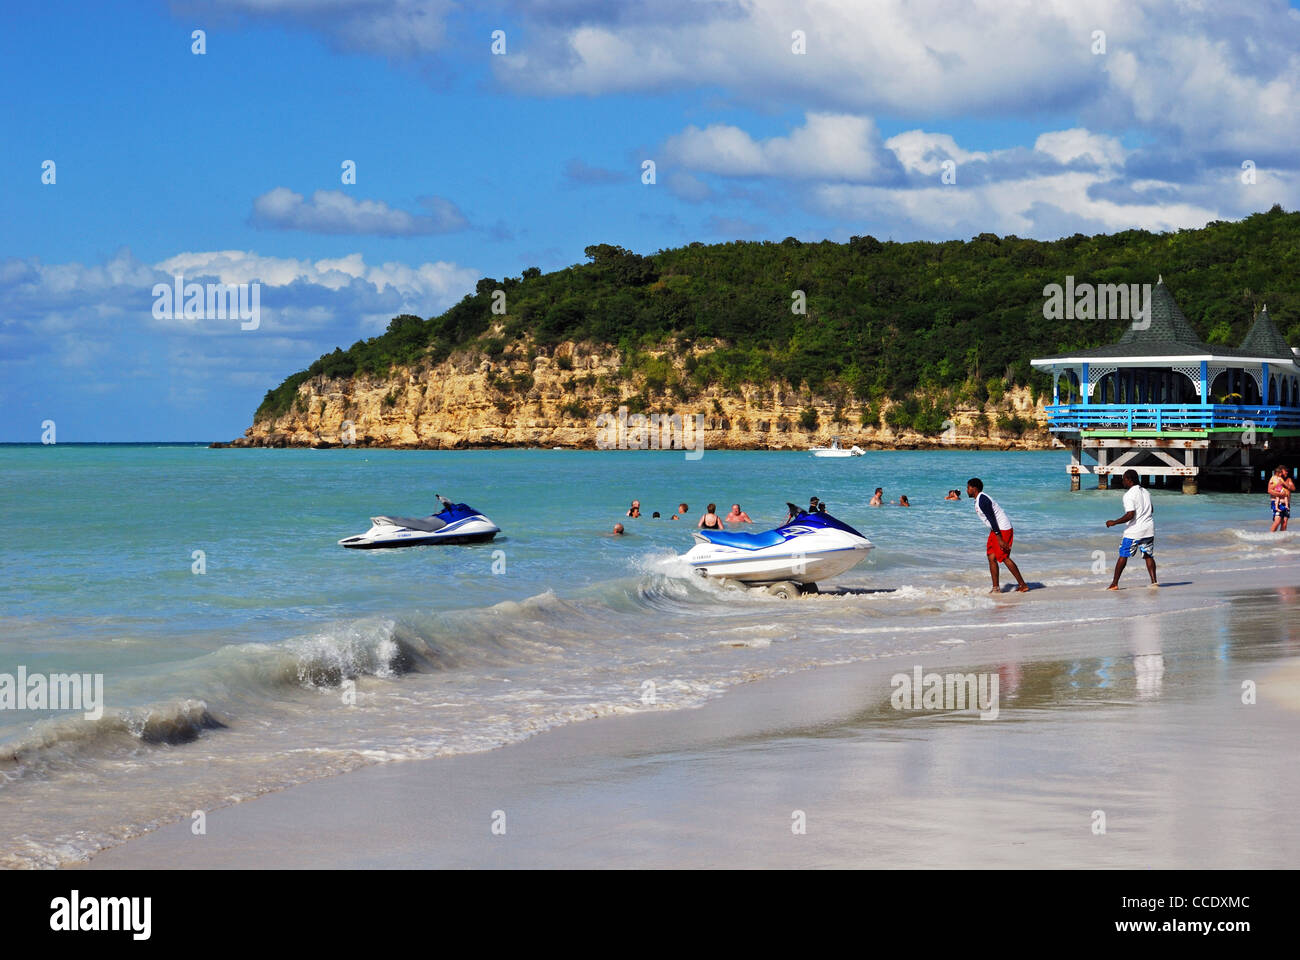 Jet ski en la playa, St. Johns, Antigua, Islas de Sotavento, Caribe, West Indies. Foto de stock